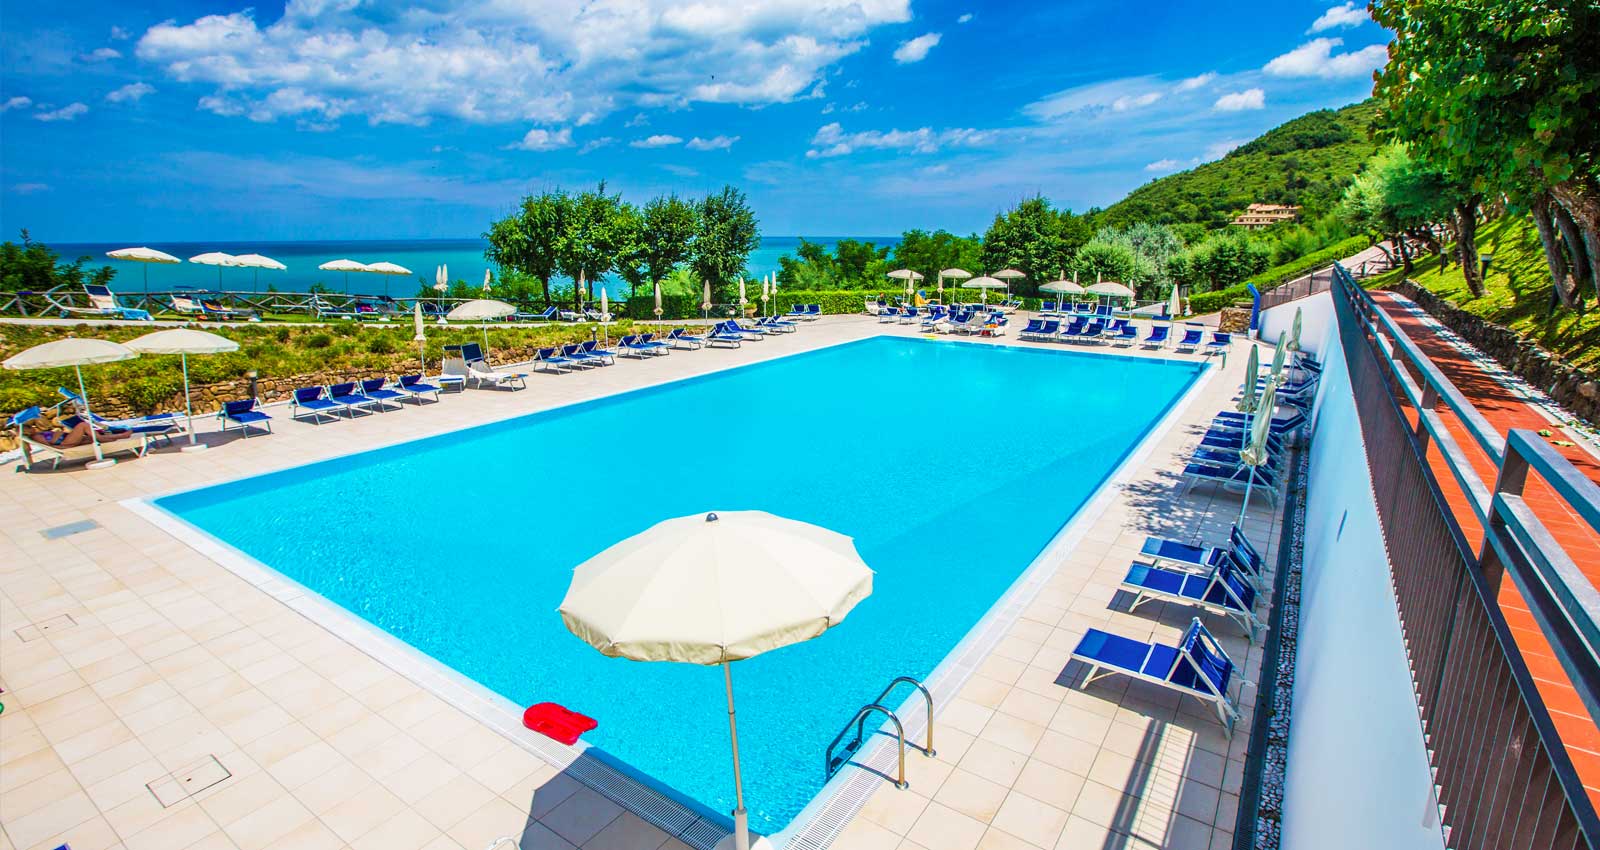 The swimming pool of the Hotel Capo Est